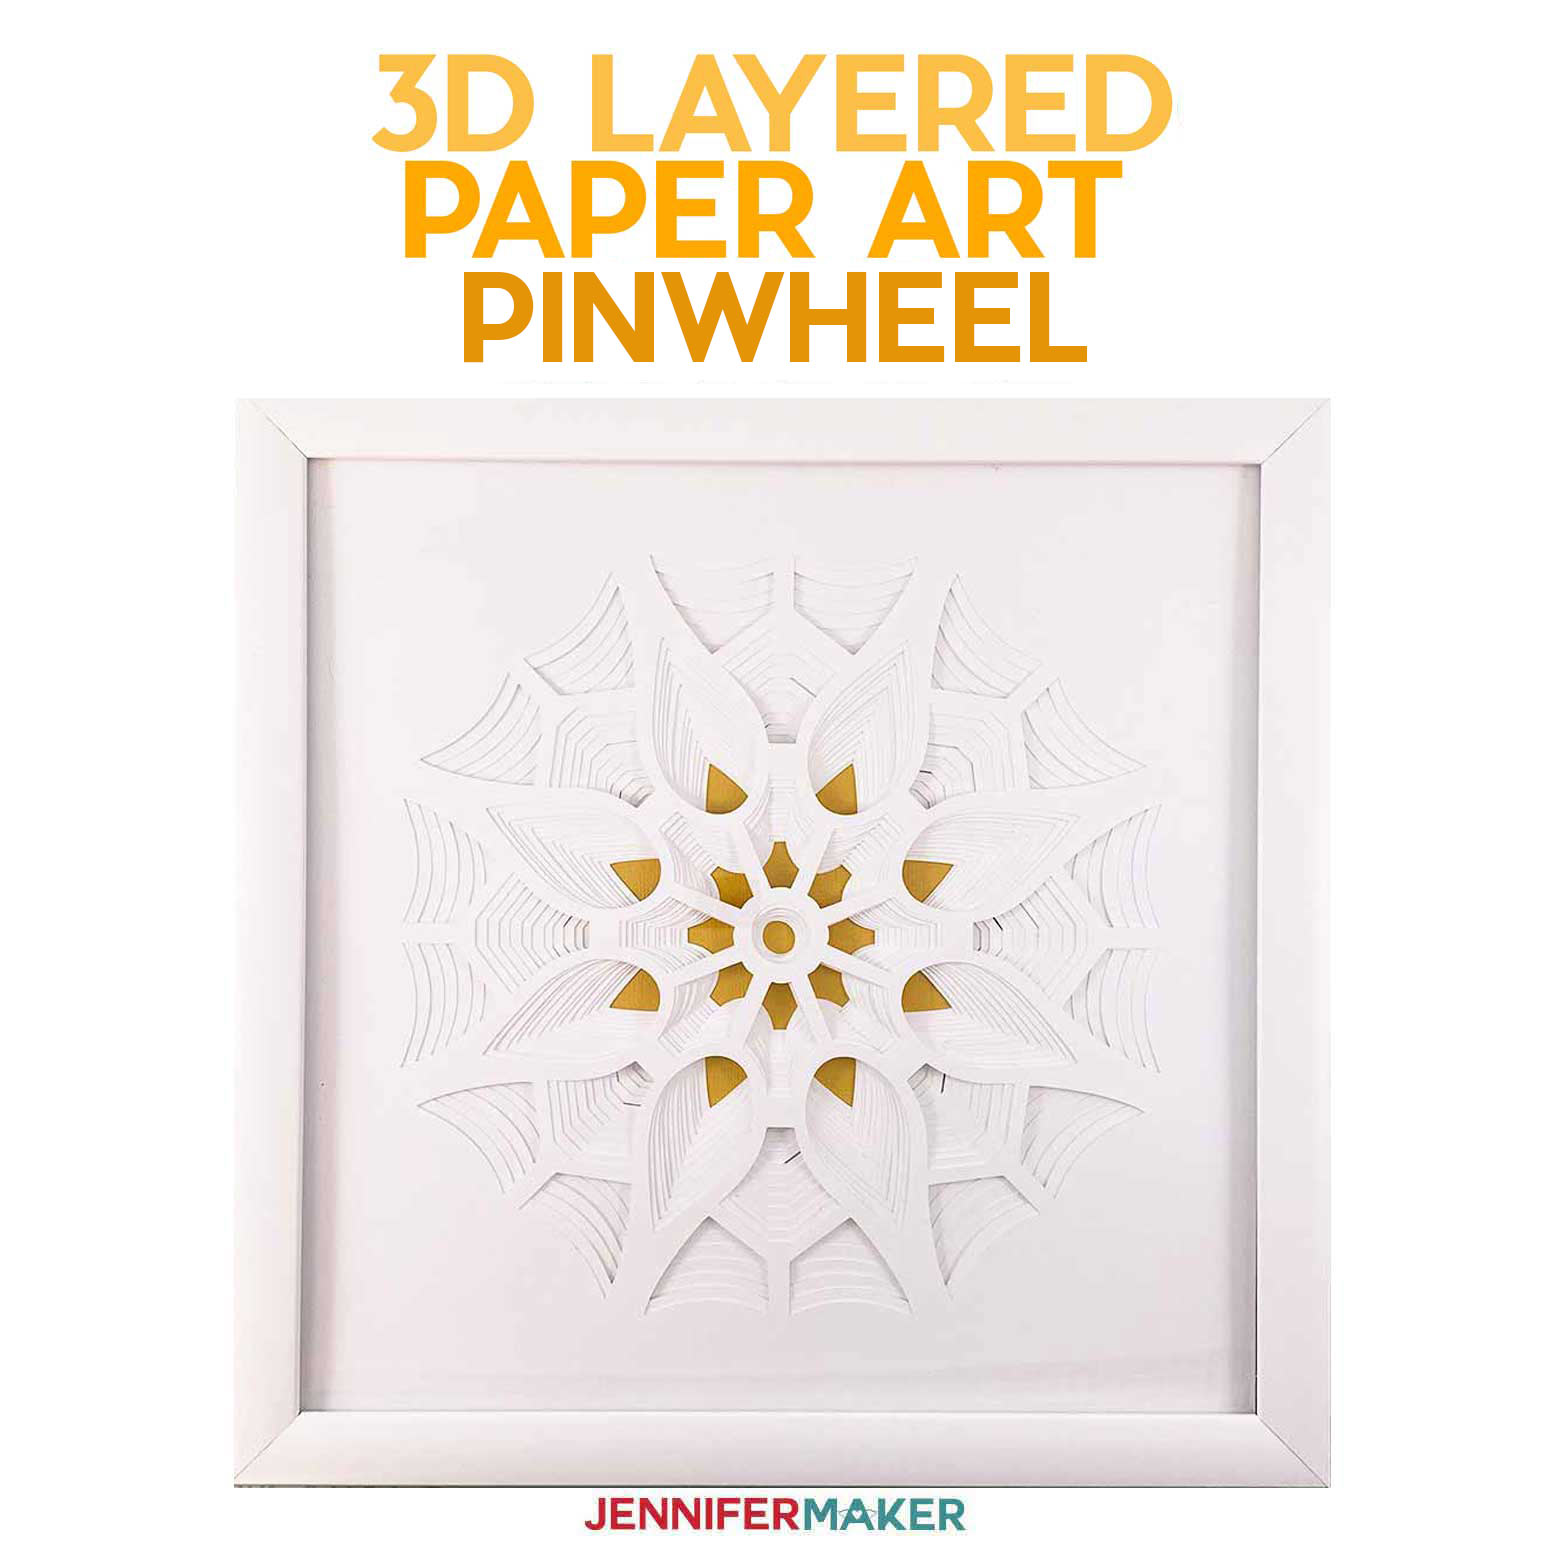 3D Layered Paper Art: The Pinwheel (Series 3 of 4)